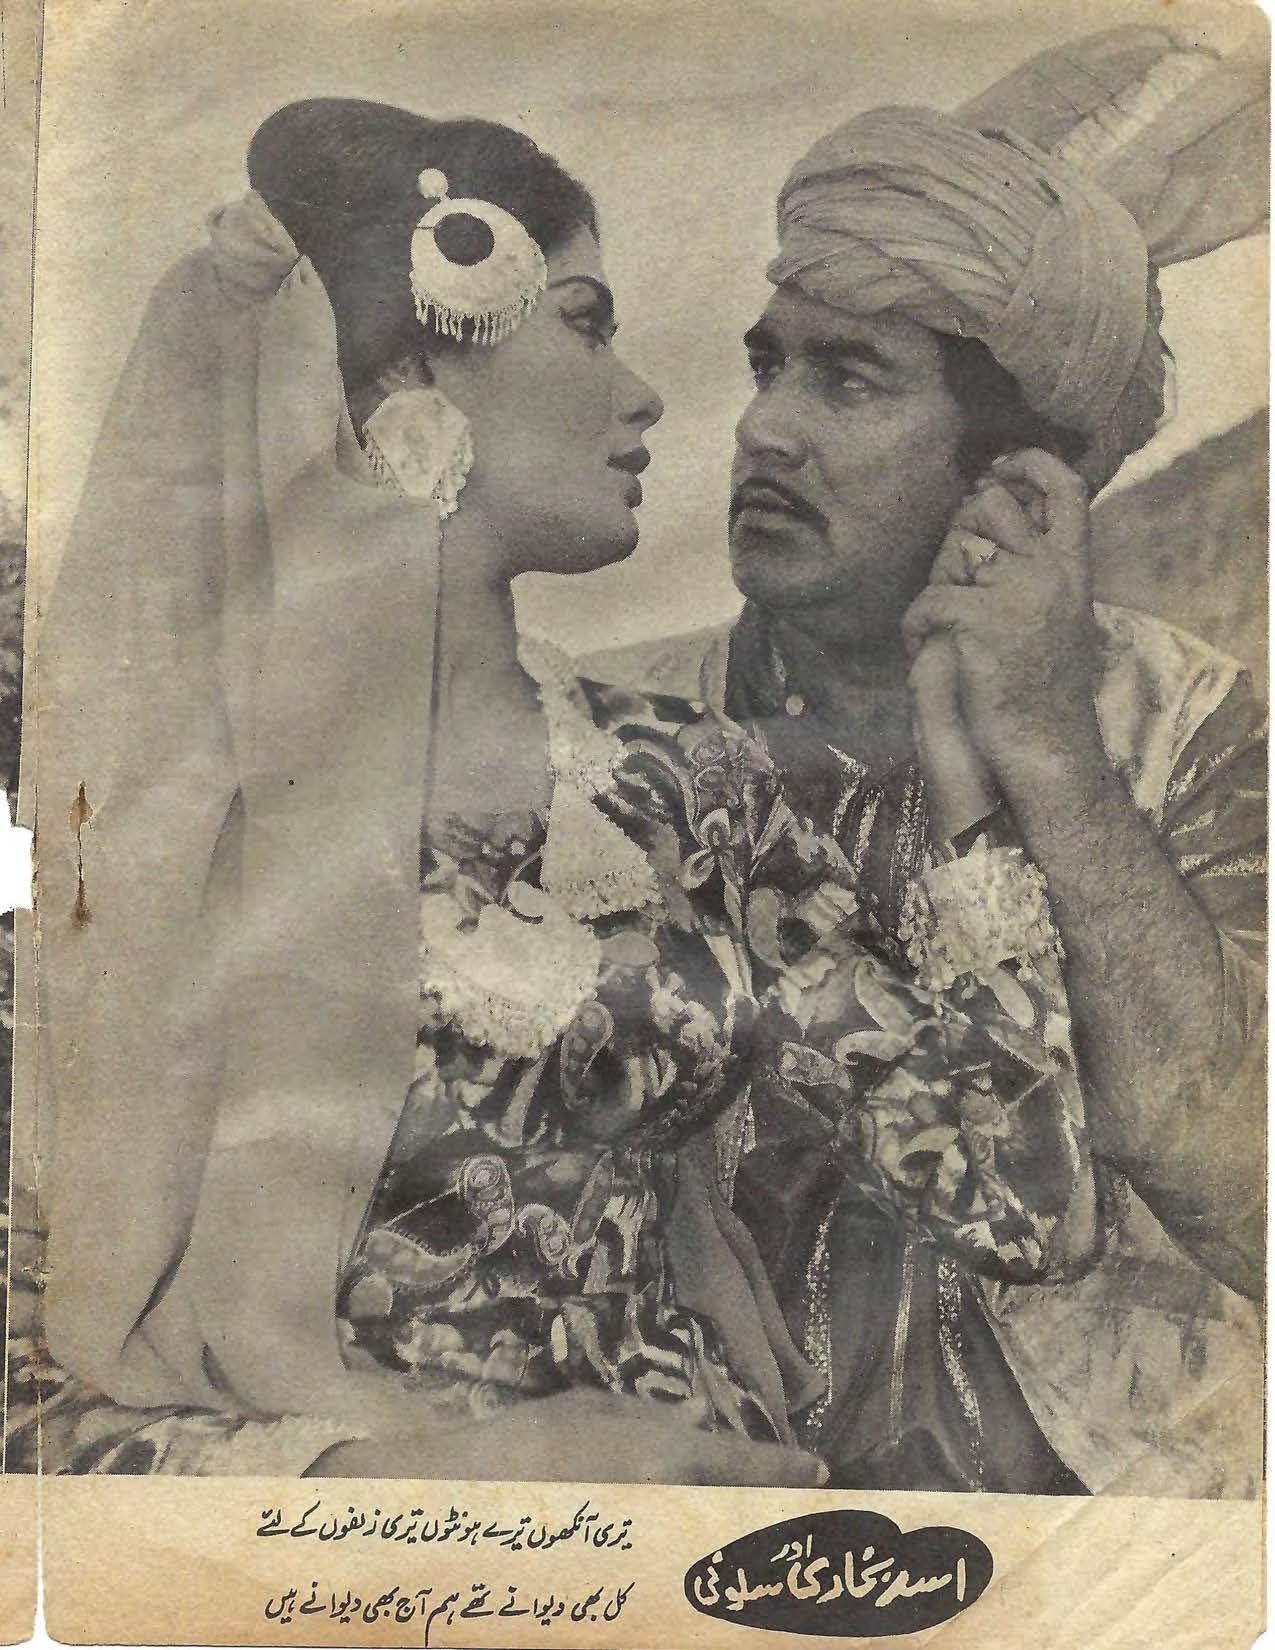 Shama (Nov, 1969) - KHAJISTAN™